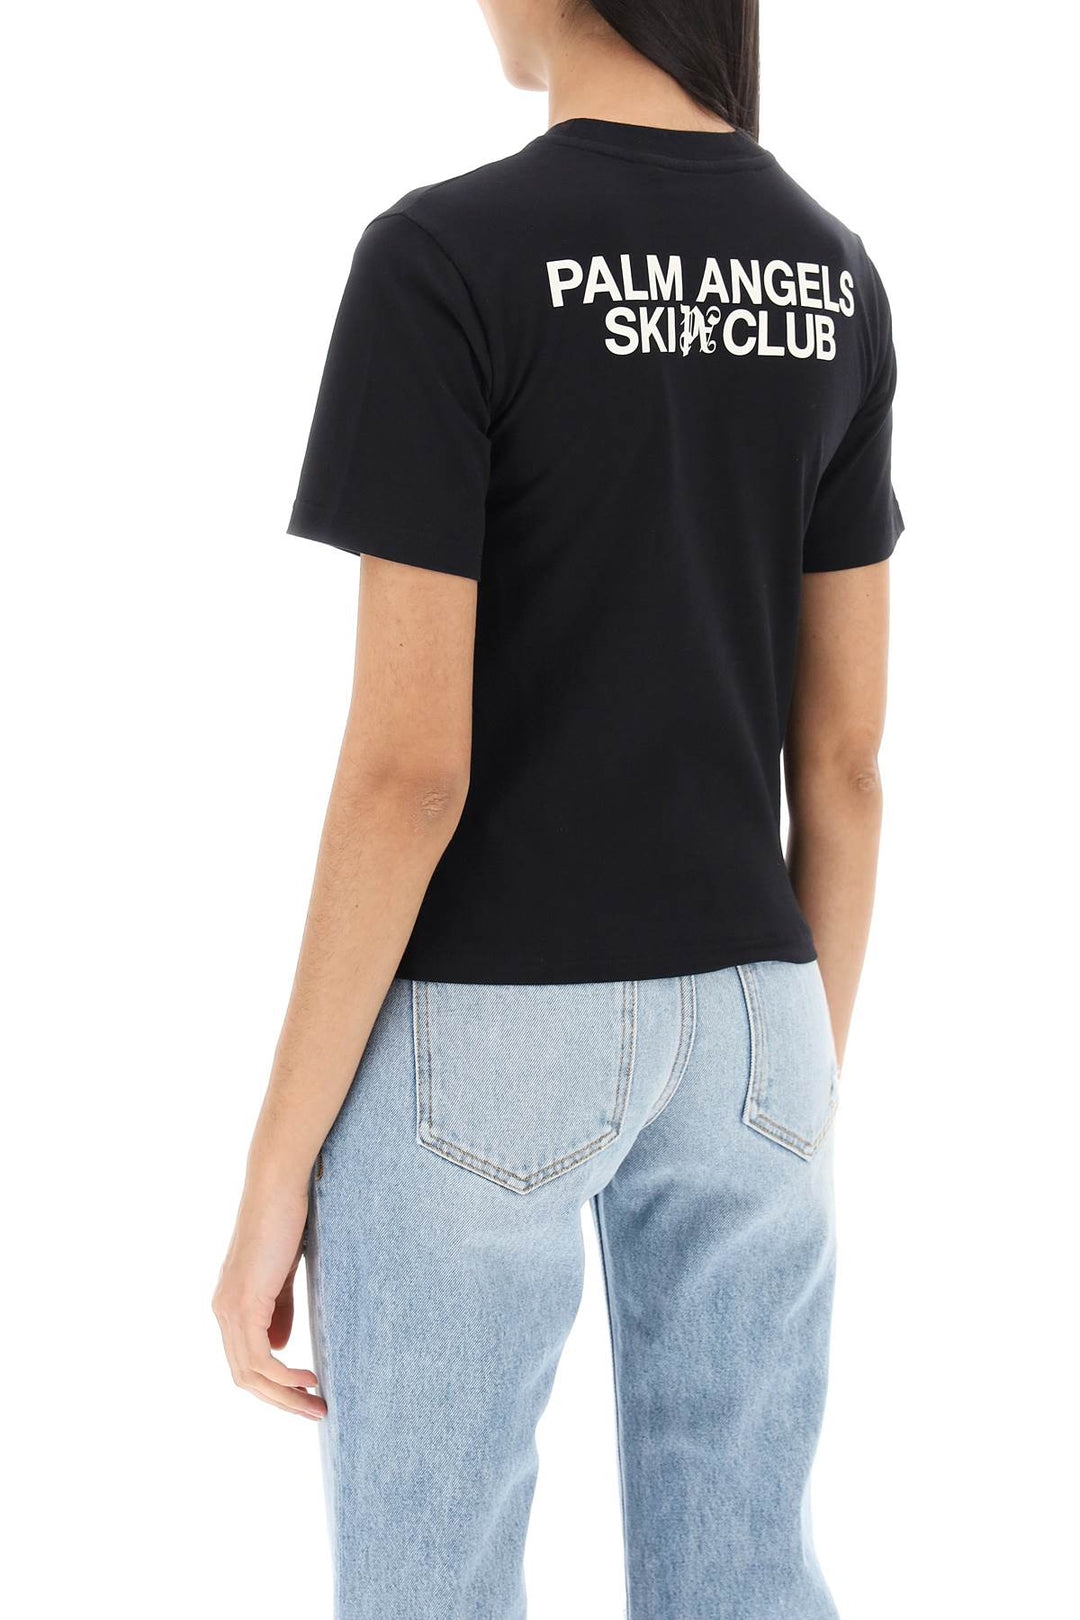 Palm angels palm angels ski club t-shirt-2